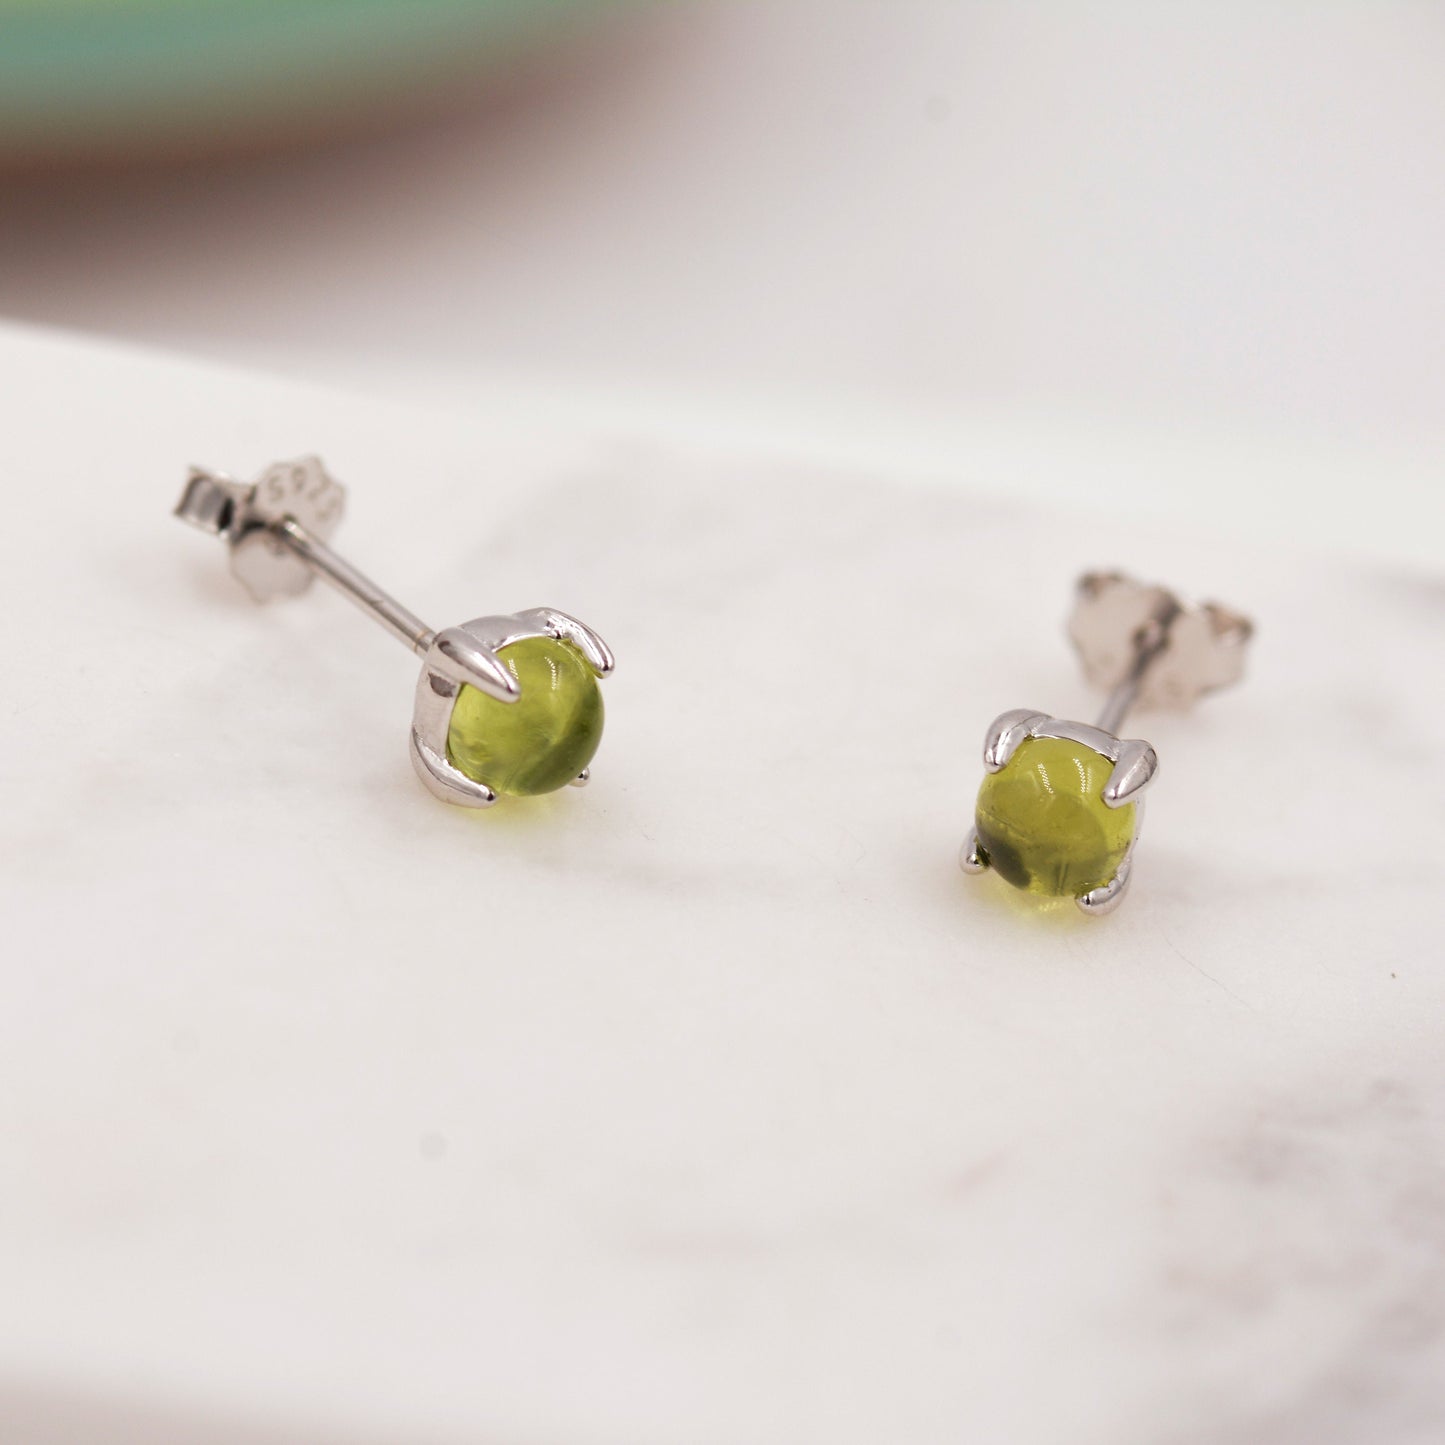 Sterling Silver Peridot Tiny Stud Earrings, Genuine Peridot Stud, Natural Semi-Precious Gemstones, Minimalist and Discreet